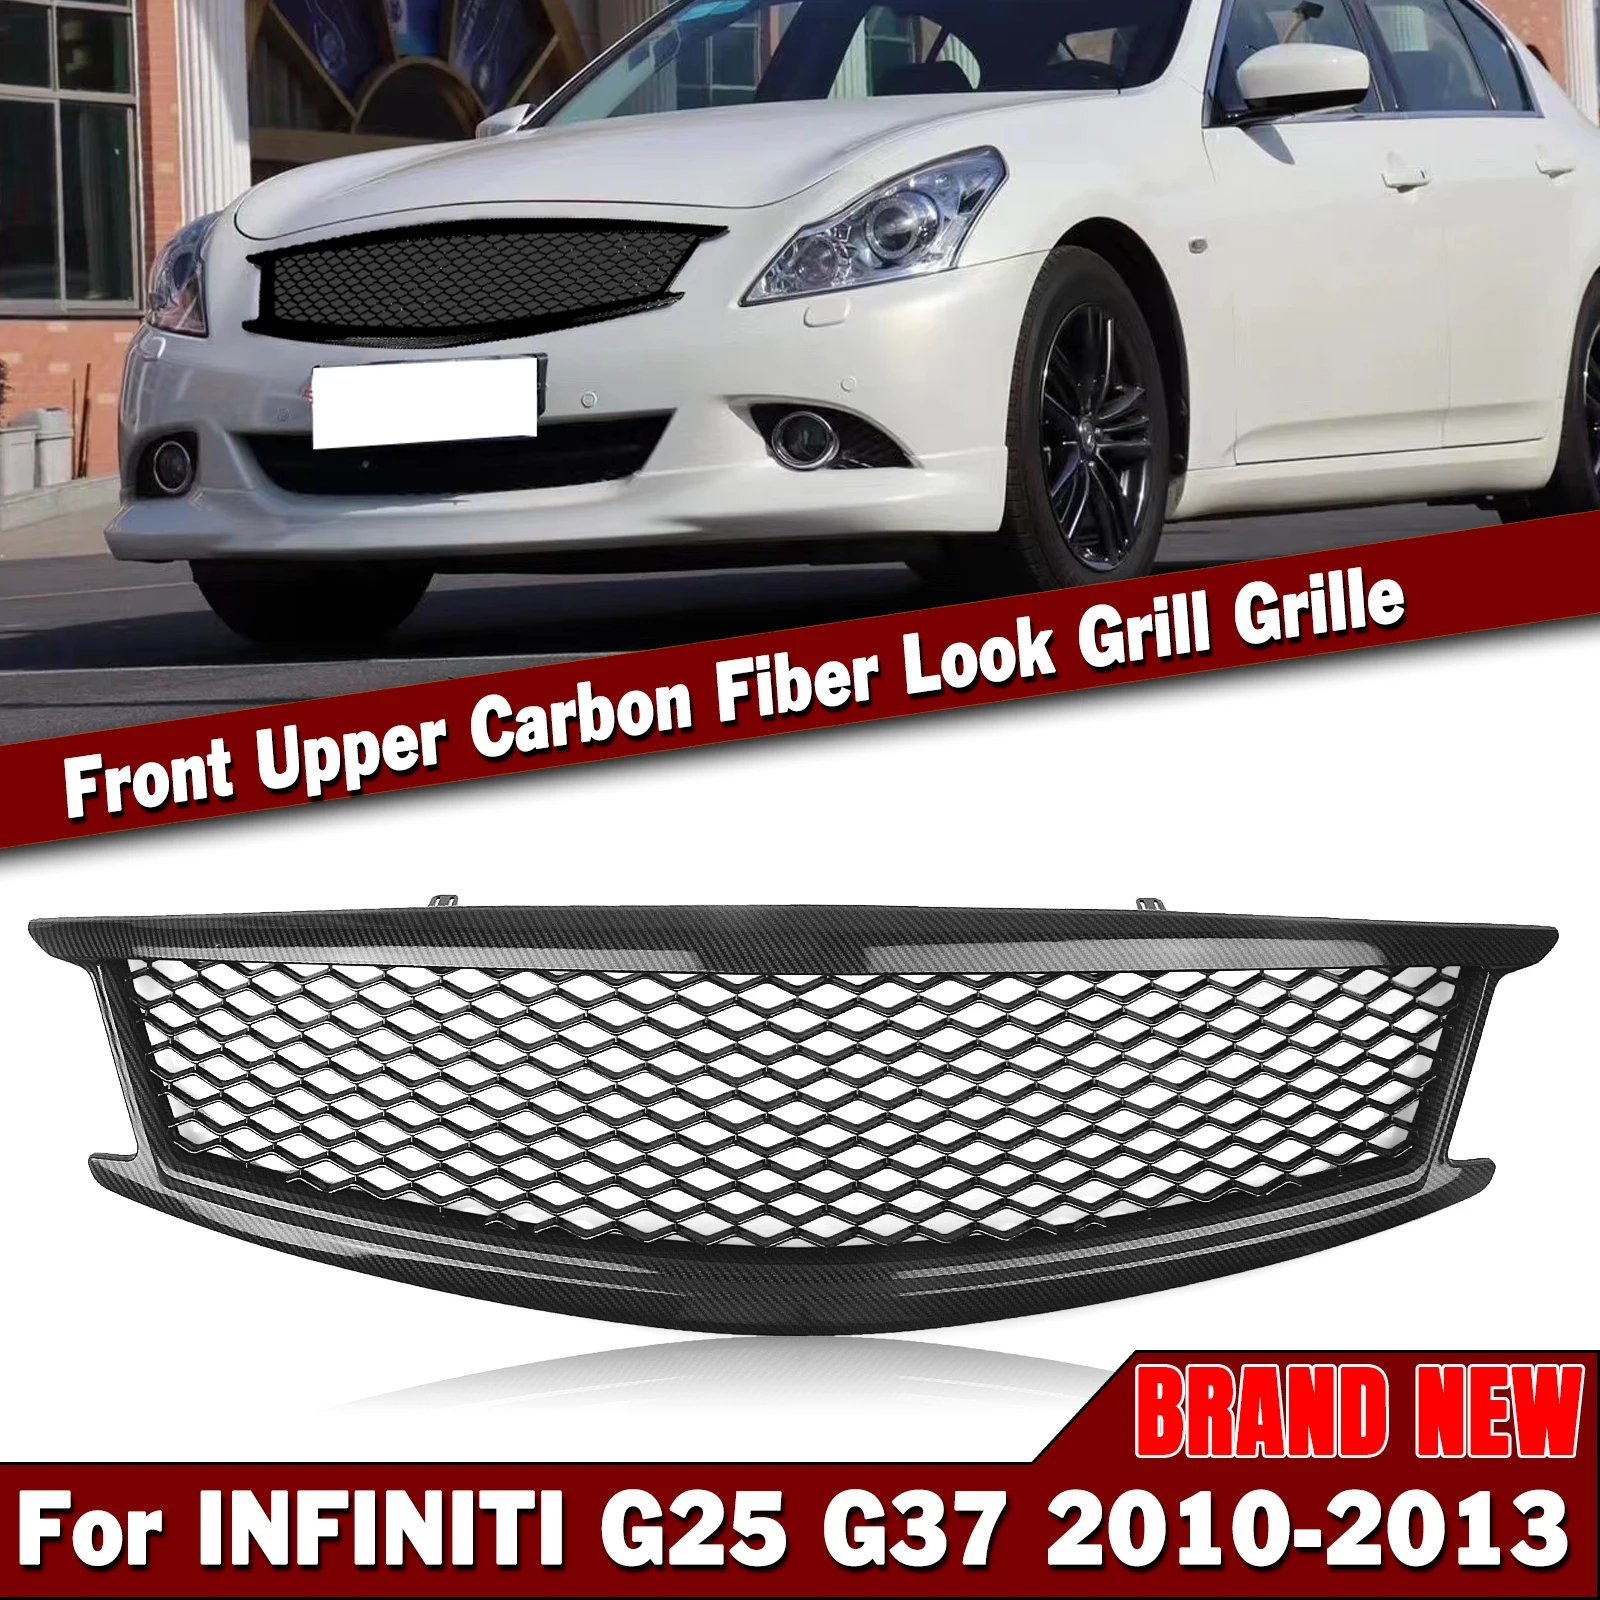 

For Infiniti G25 G37 Sedan 4 Door 2010 2011 2012 2013 Front Grille Grill Carbon Fiber Look/Gloss/Matte Black Bumper Hood Mesh